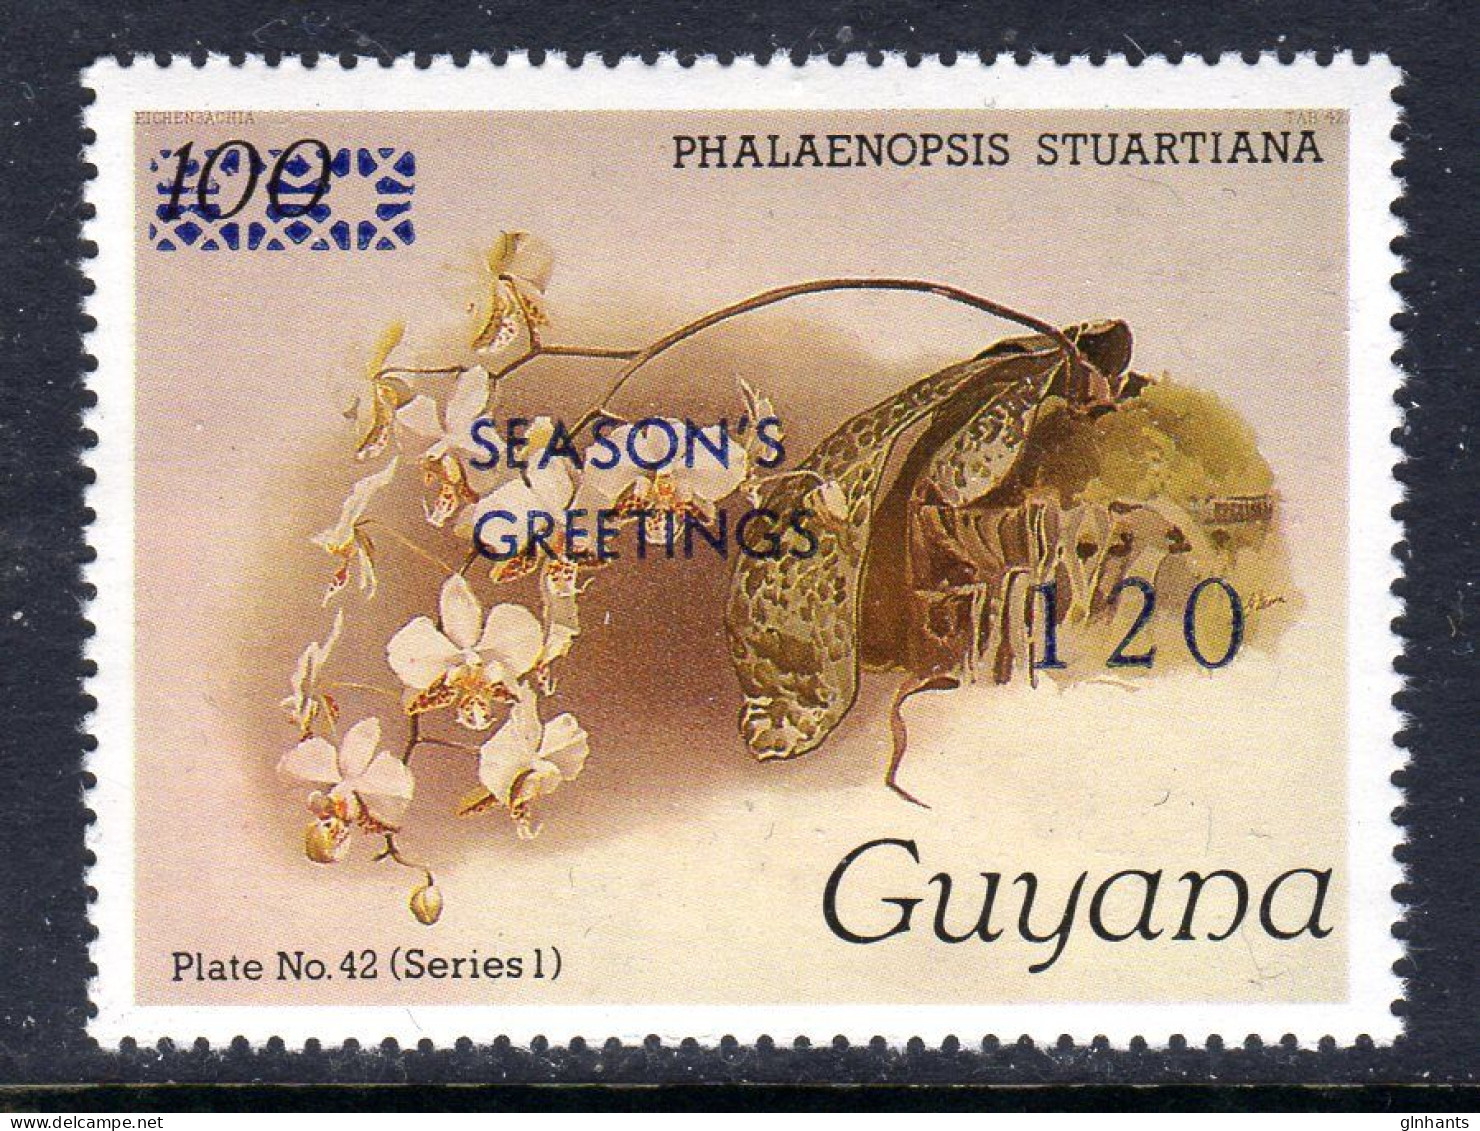 GUYANA - 1988 REICHENBACHIA ORCHIDS OVERPRINTED SEASONS GREETINGS PLATE 42 SERIES 1 FINE MNH ** SG 2524 - Guyana (1966-...)